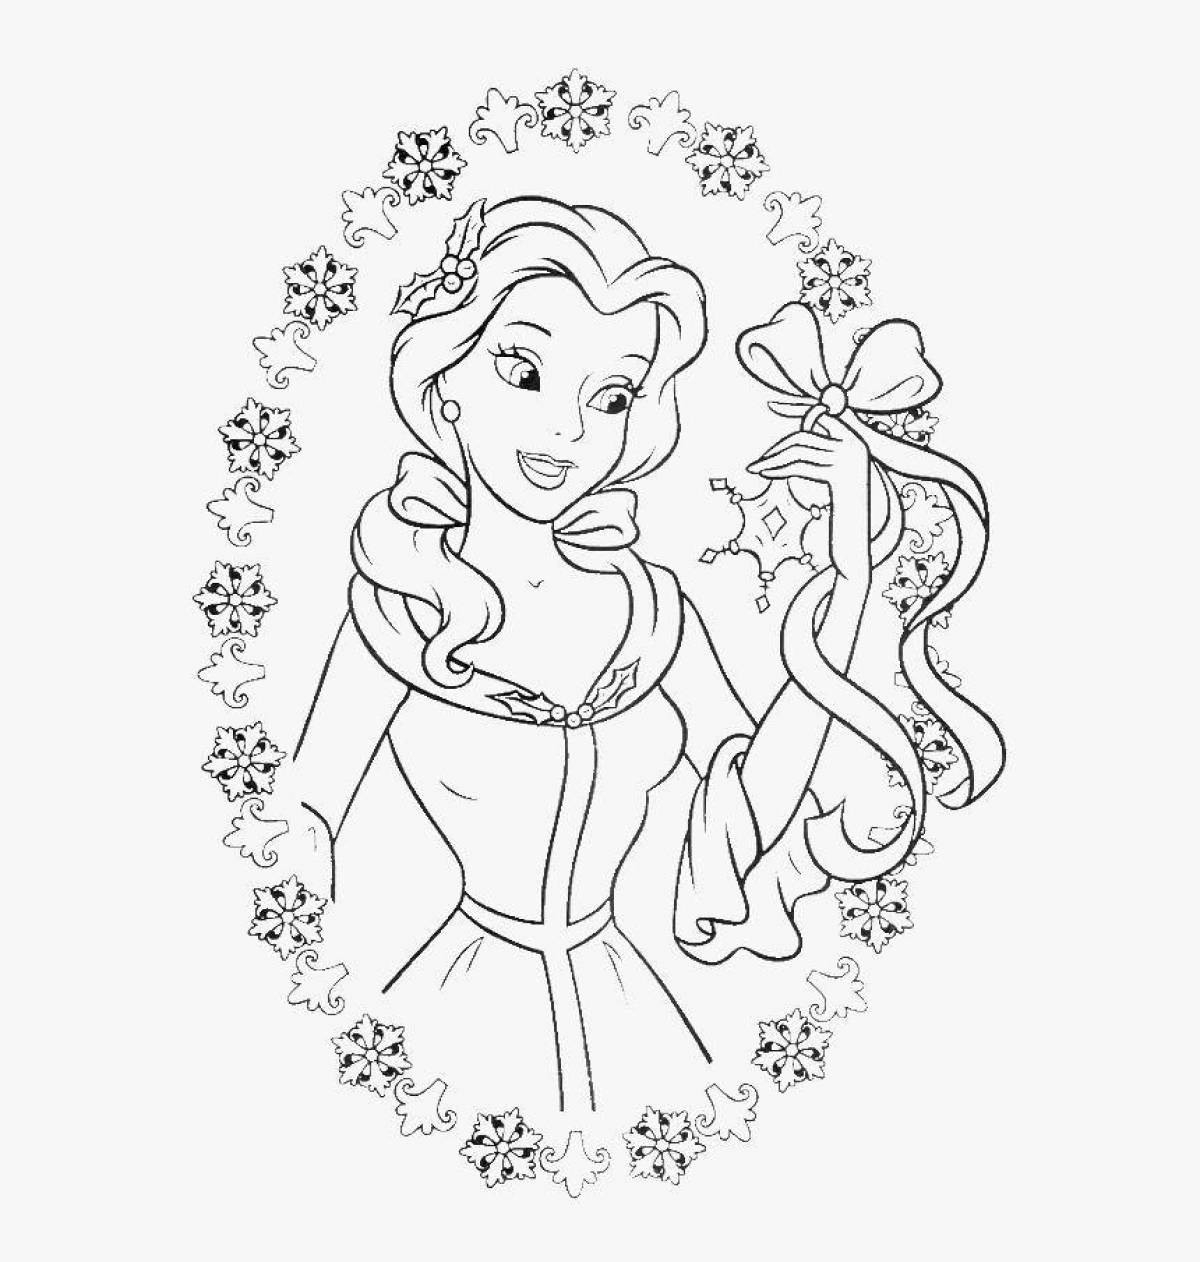 Disney princess coloring book for girls